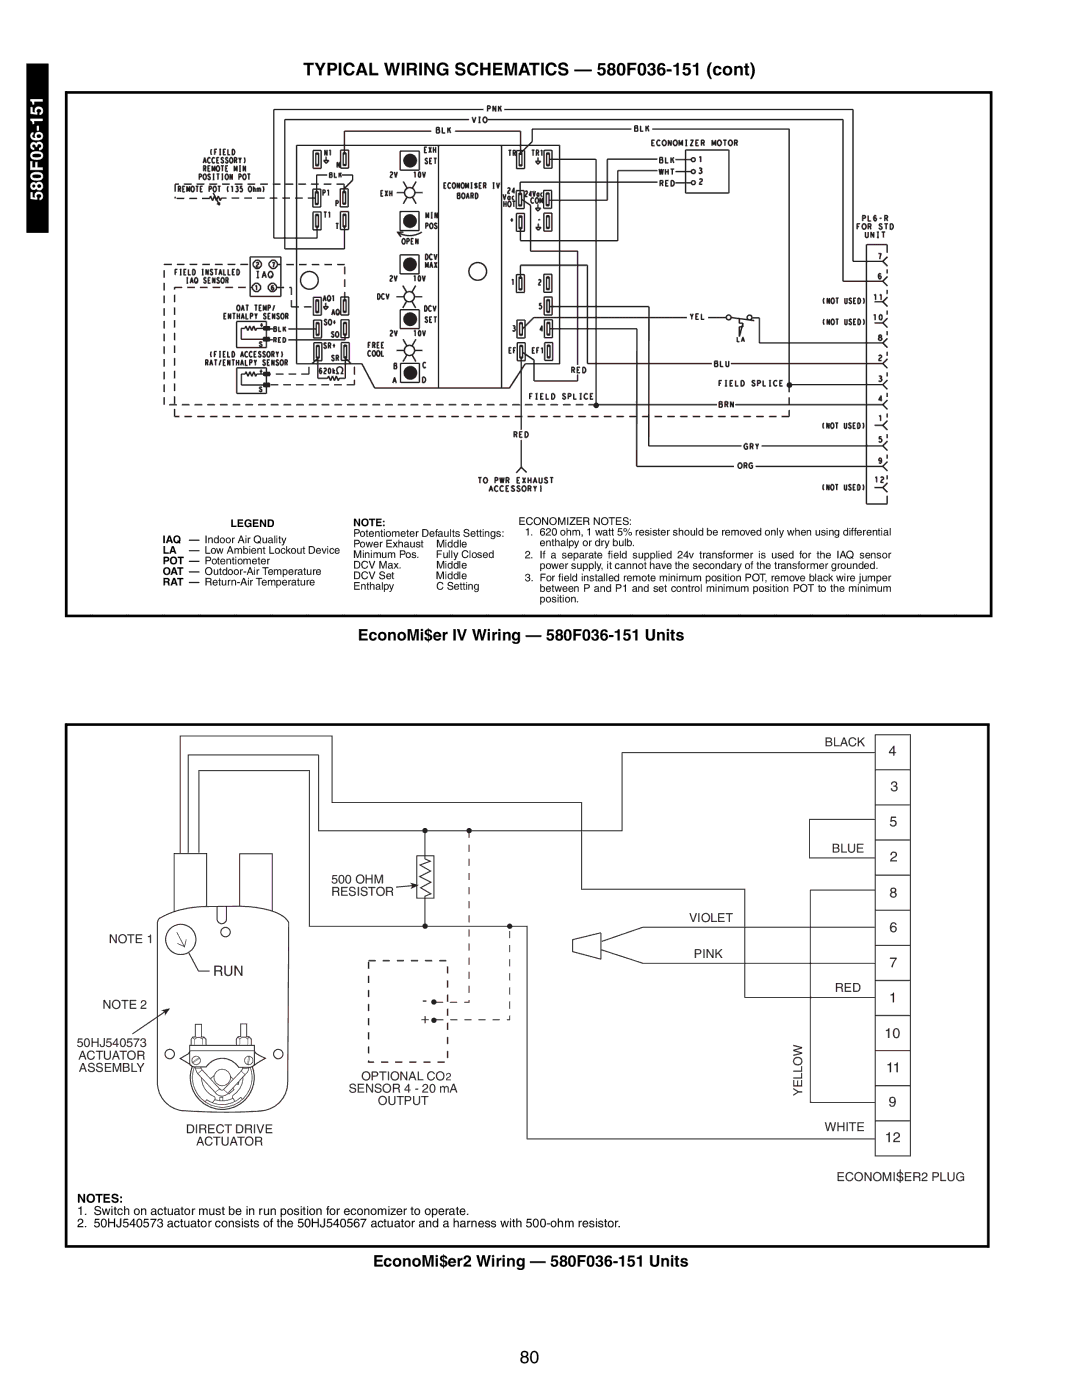 Bryant 581A/B manual Typical Wiring Schematics 580F036-151, EconoMi$er IV Wiring 580F036-151 Units 